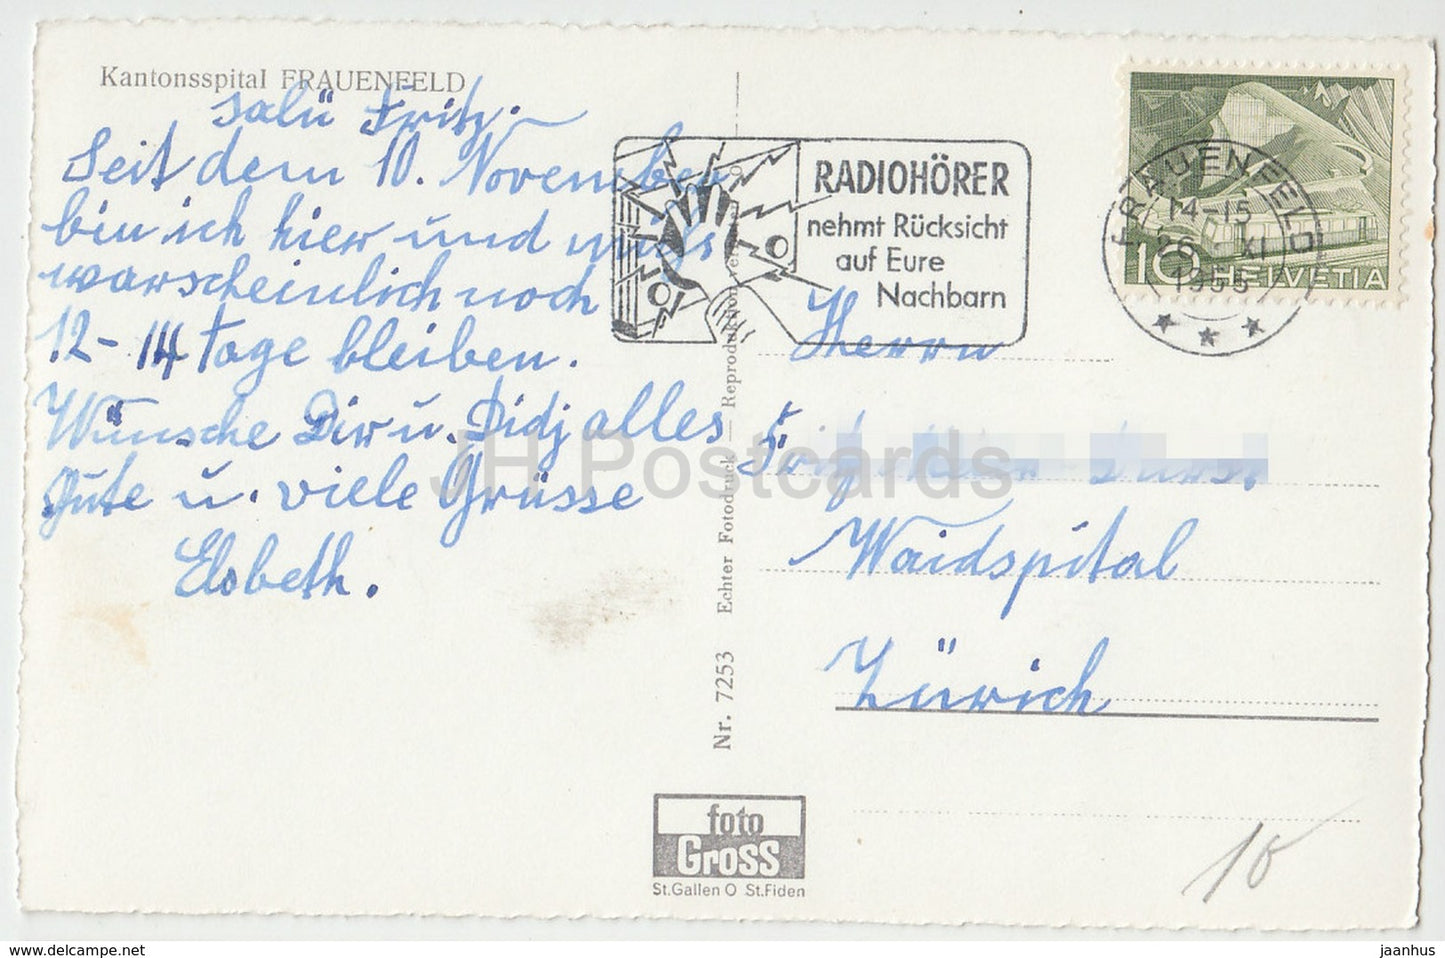 Frauenfeld - Spital - Kantonsspital - 7253 - 1955 - Schweiz - gebraucht